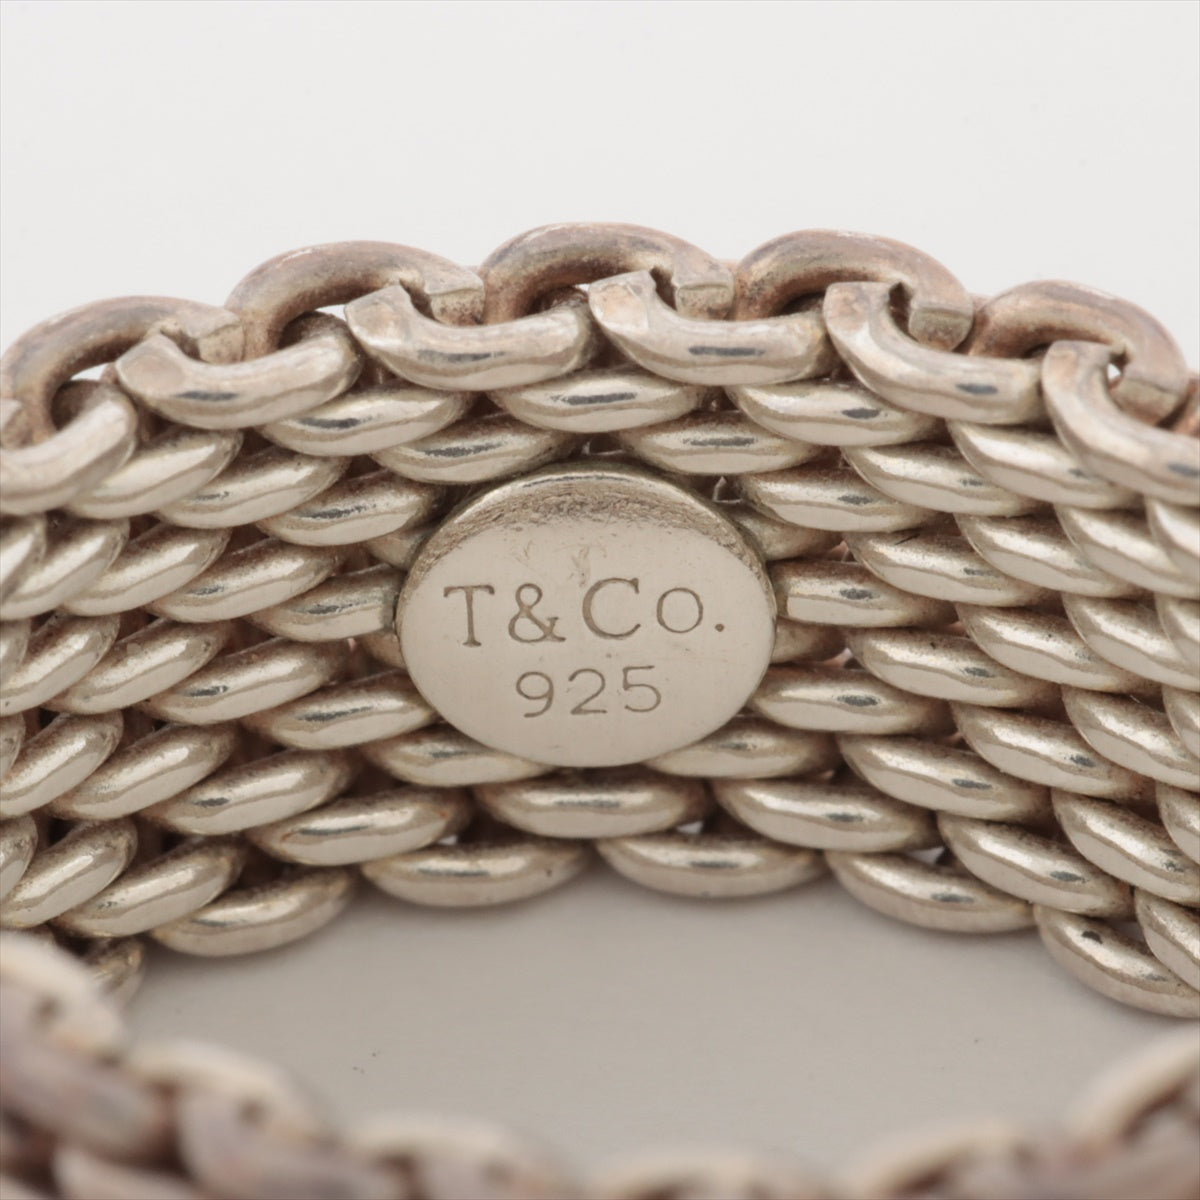 Tiffany Somerset rings 925 8.8g Silver